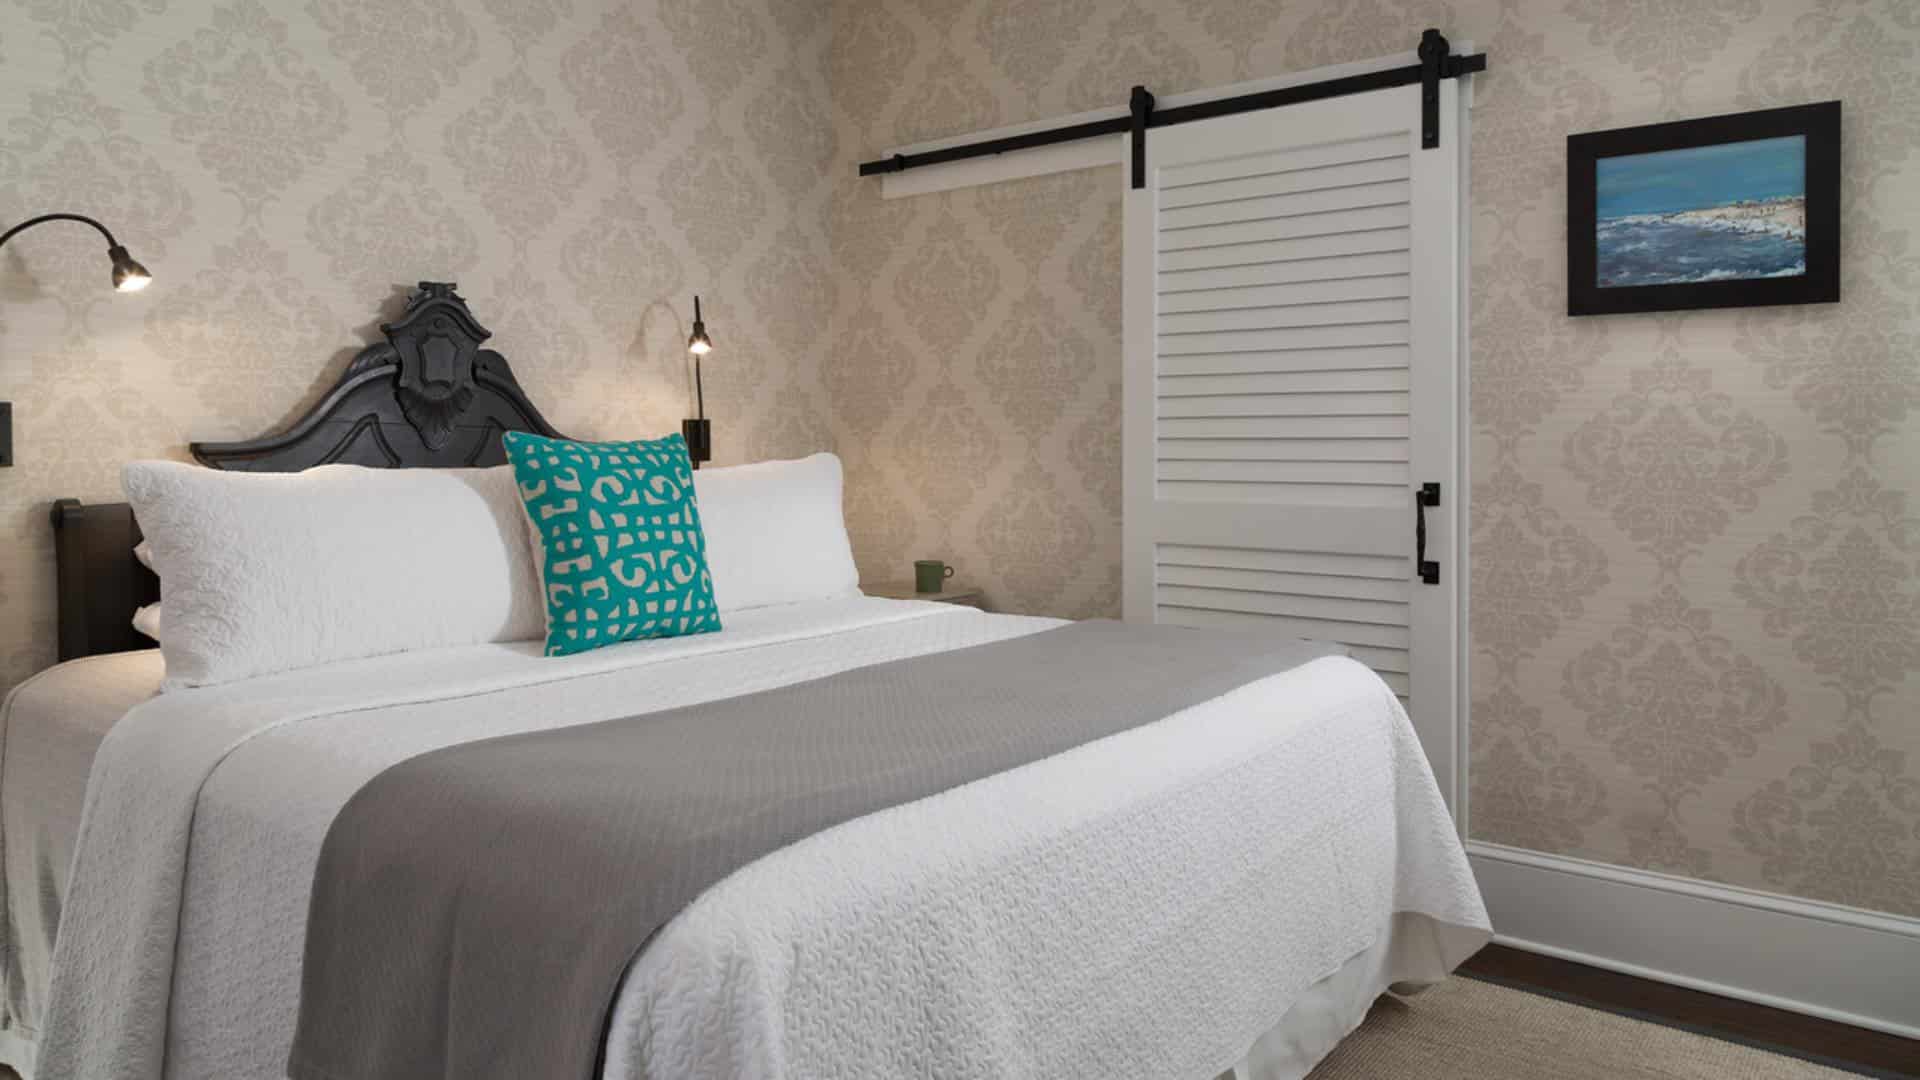 Bedroom with dark wooden ornate headboard, white bedding, gray blanket, hardwood flooring, and ornate wallpaper